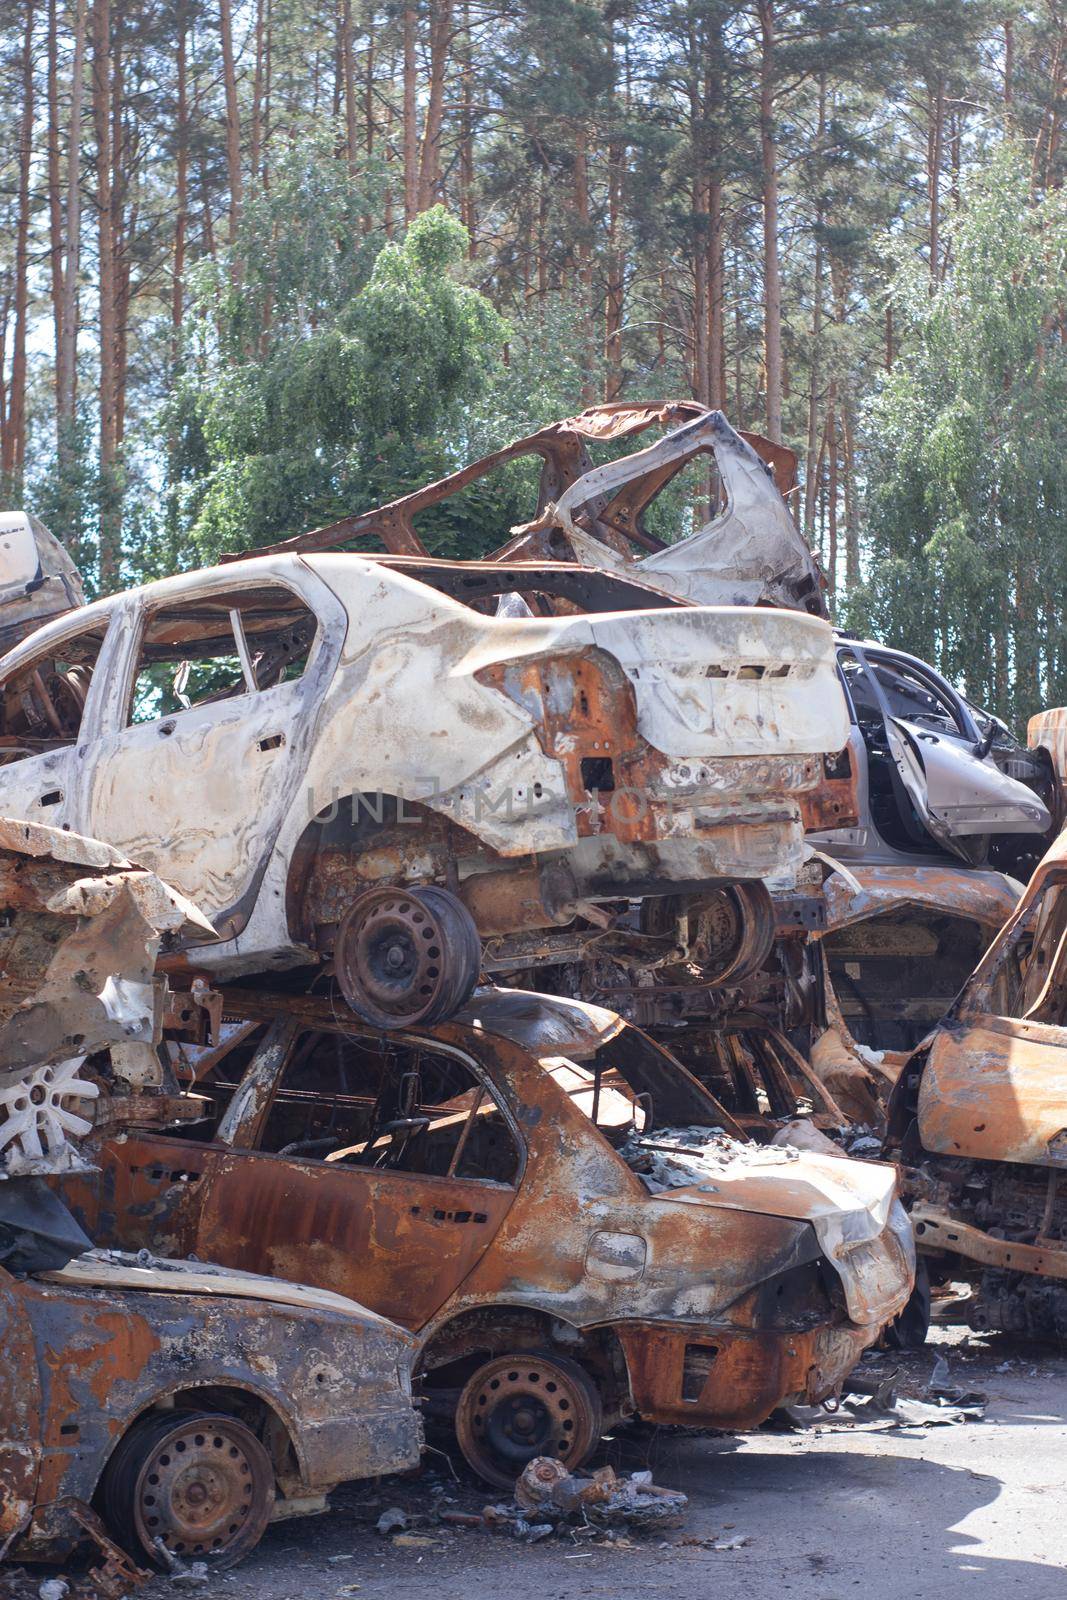 war in ukraine. Car graveyard. Shot cars of civilians. russia's war against Ukraine. Burnt and blown up car. Cars damaged after shelling. irpin bucha. war crimes.